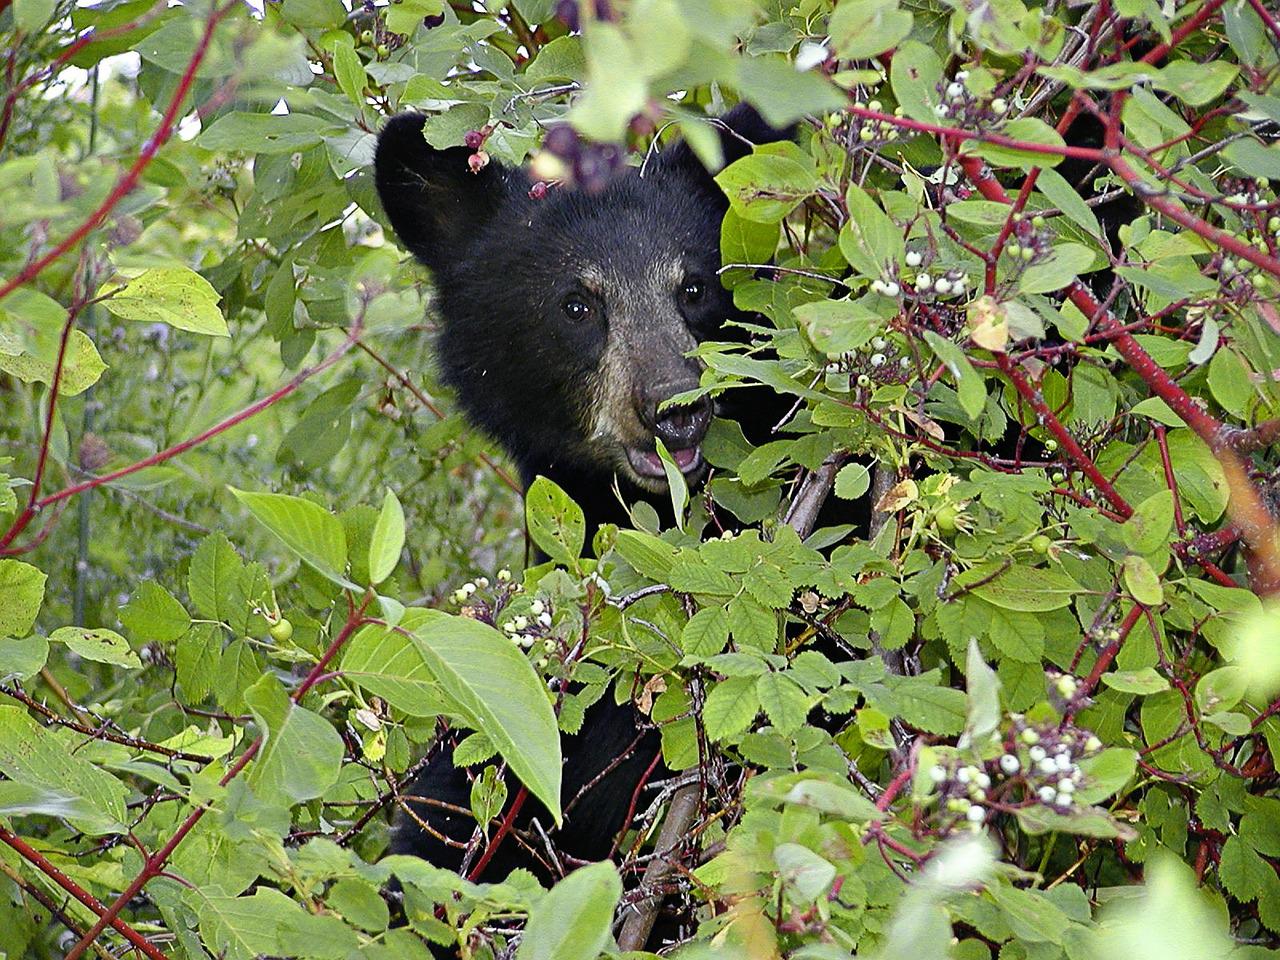 Black bear cub peeking through bushes.